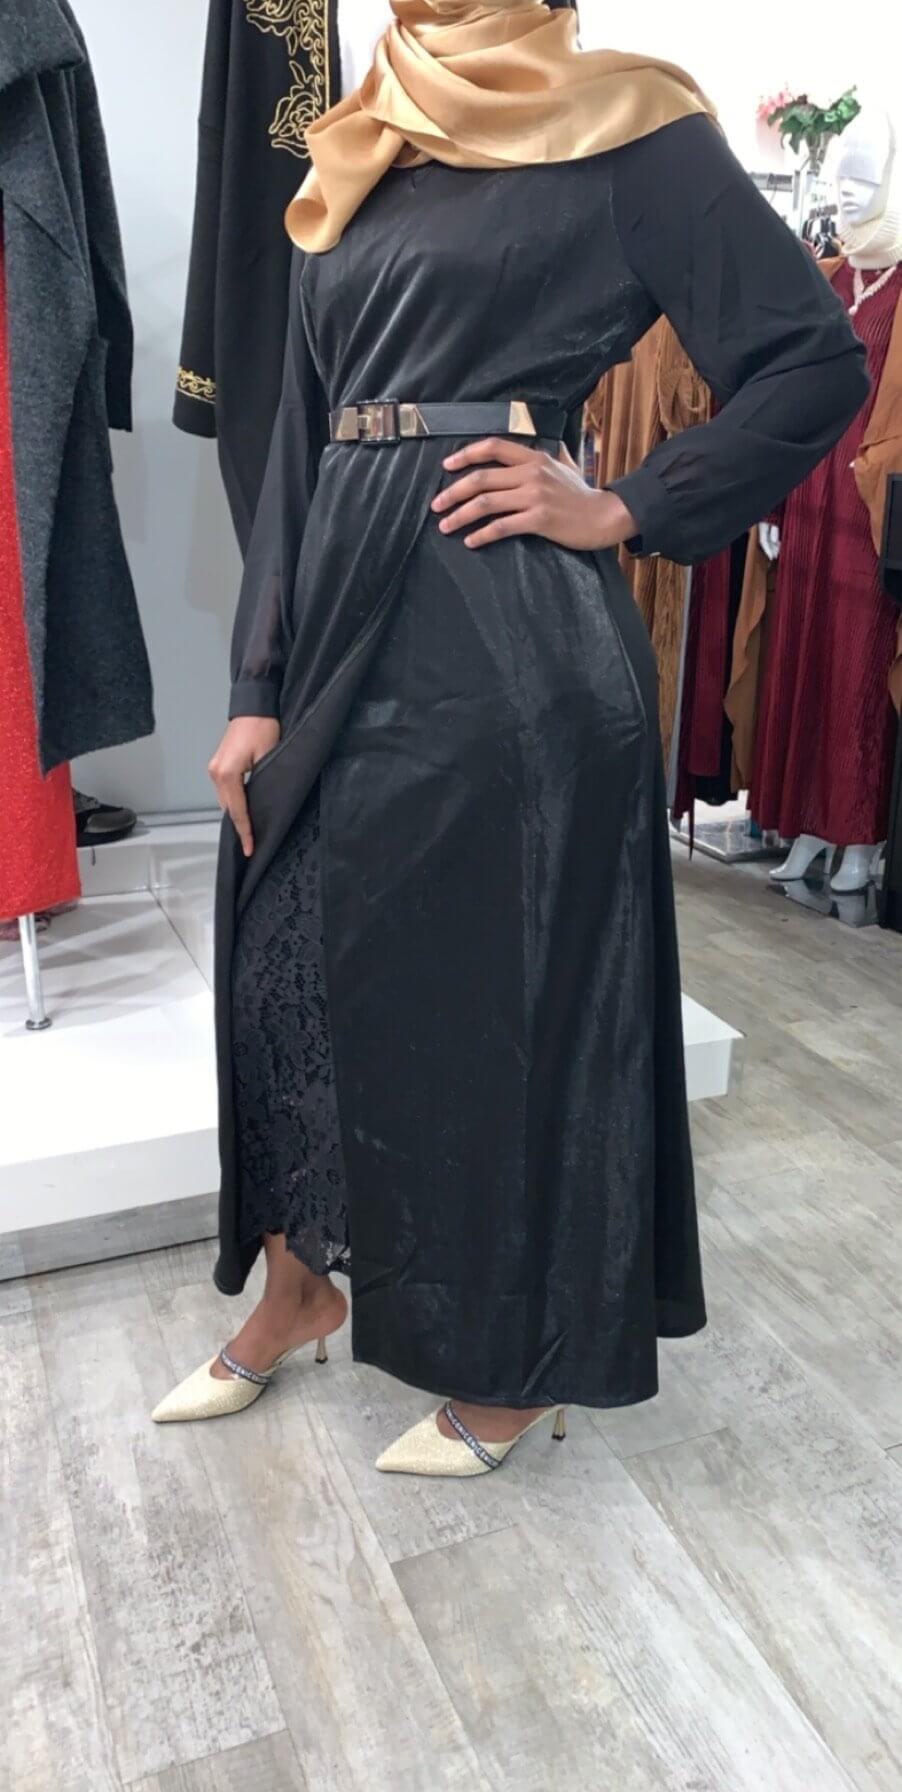 Aisha Lace Evening Dress in black color available at ZIZI Boutique